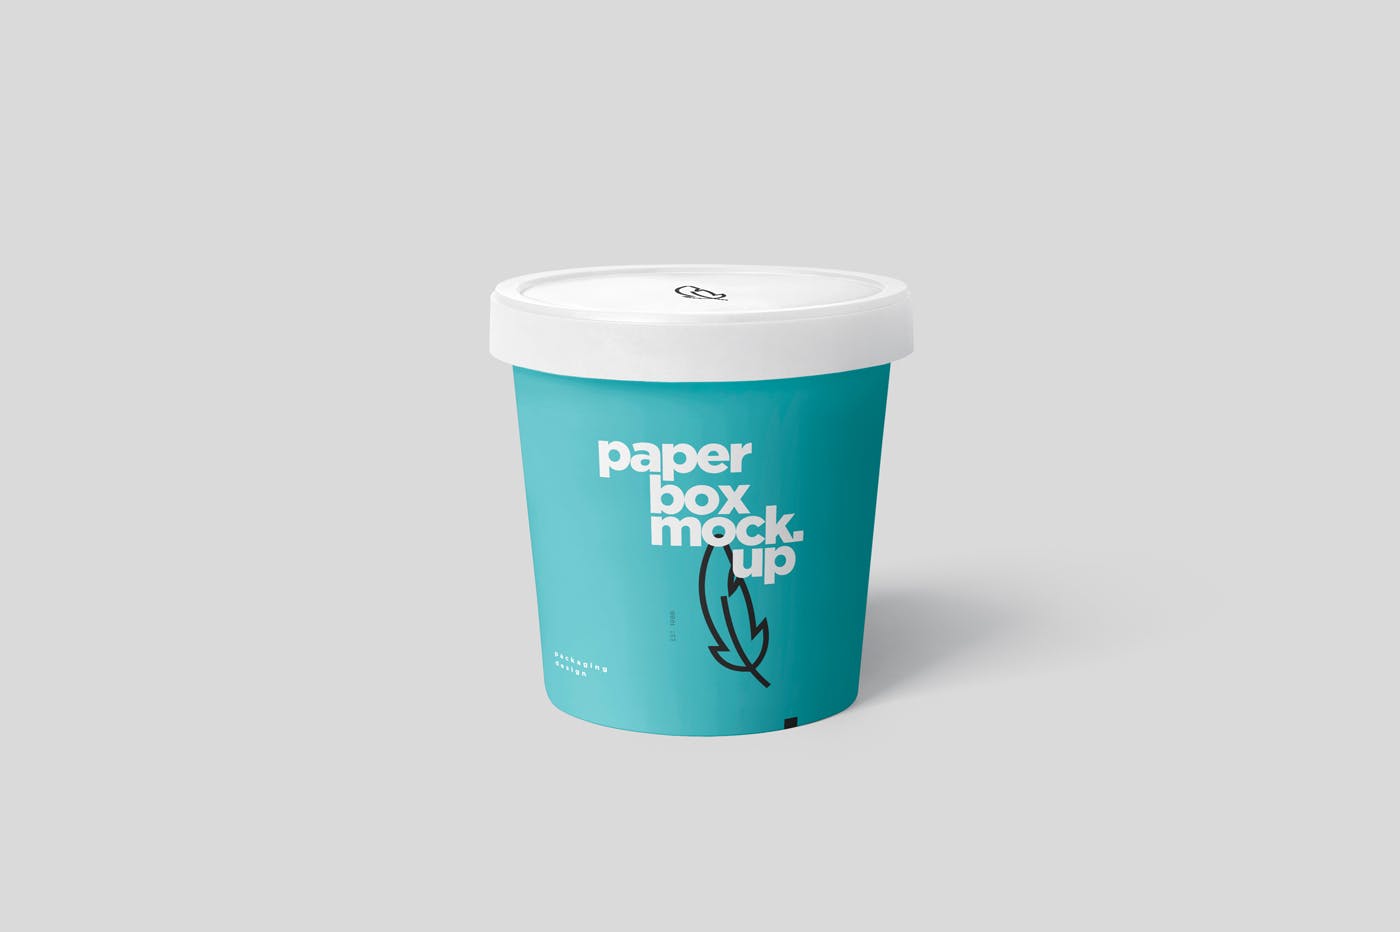 桶状纸筒包装设计效果图样机模板 Paper Box Mockup PSDs Round – Large Size插图(4)